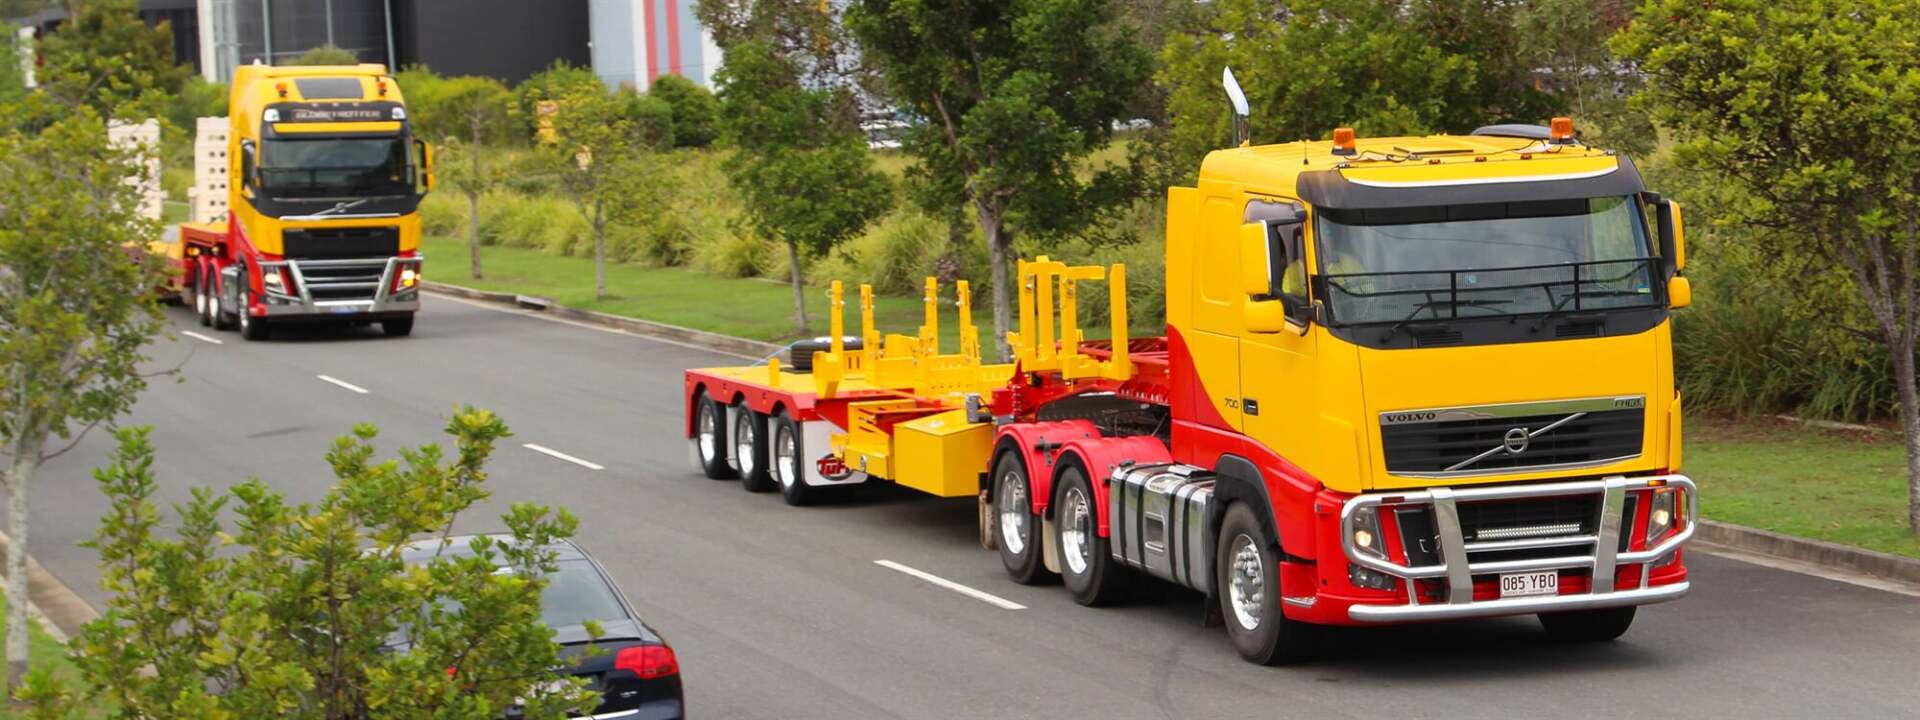 Two Crane Trucks On A Highway — Crane Hire & Transport in Moranbah, QLD